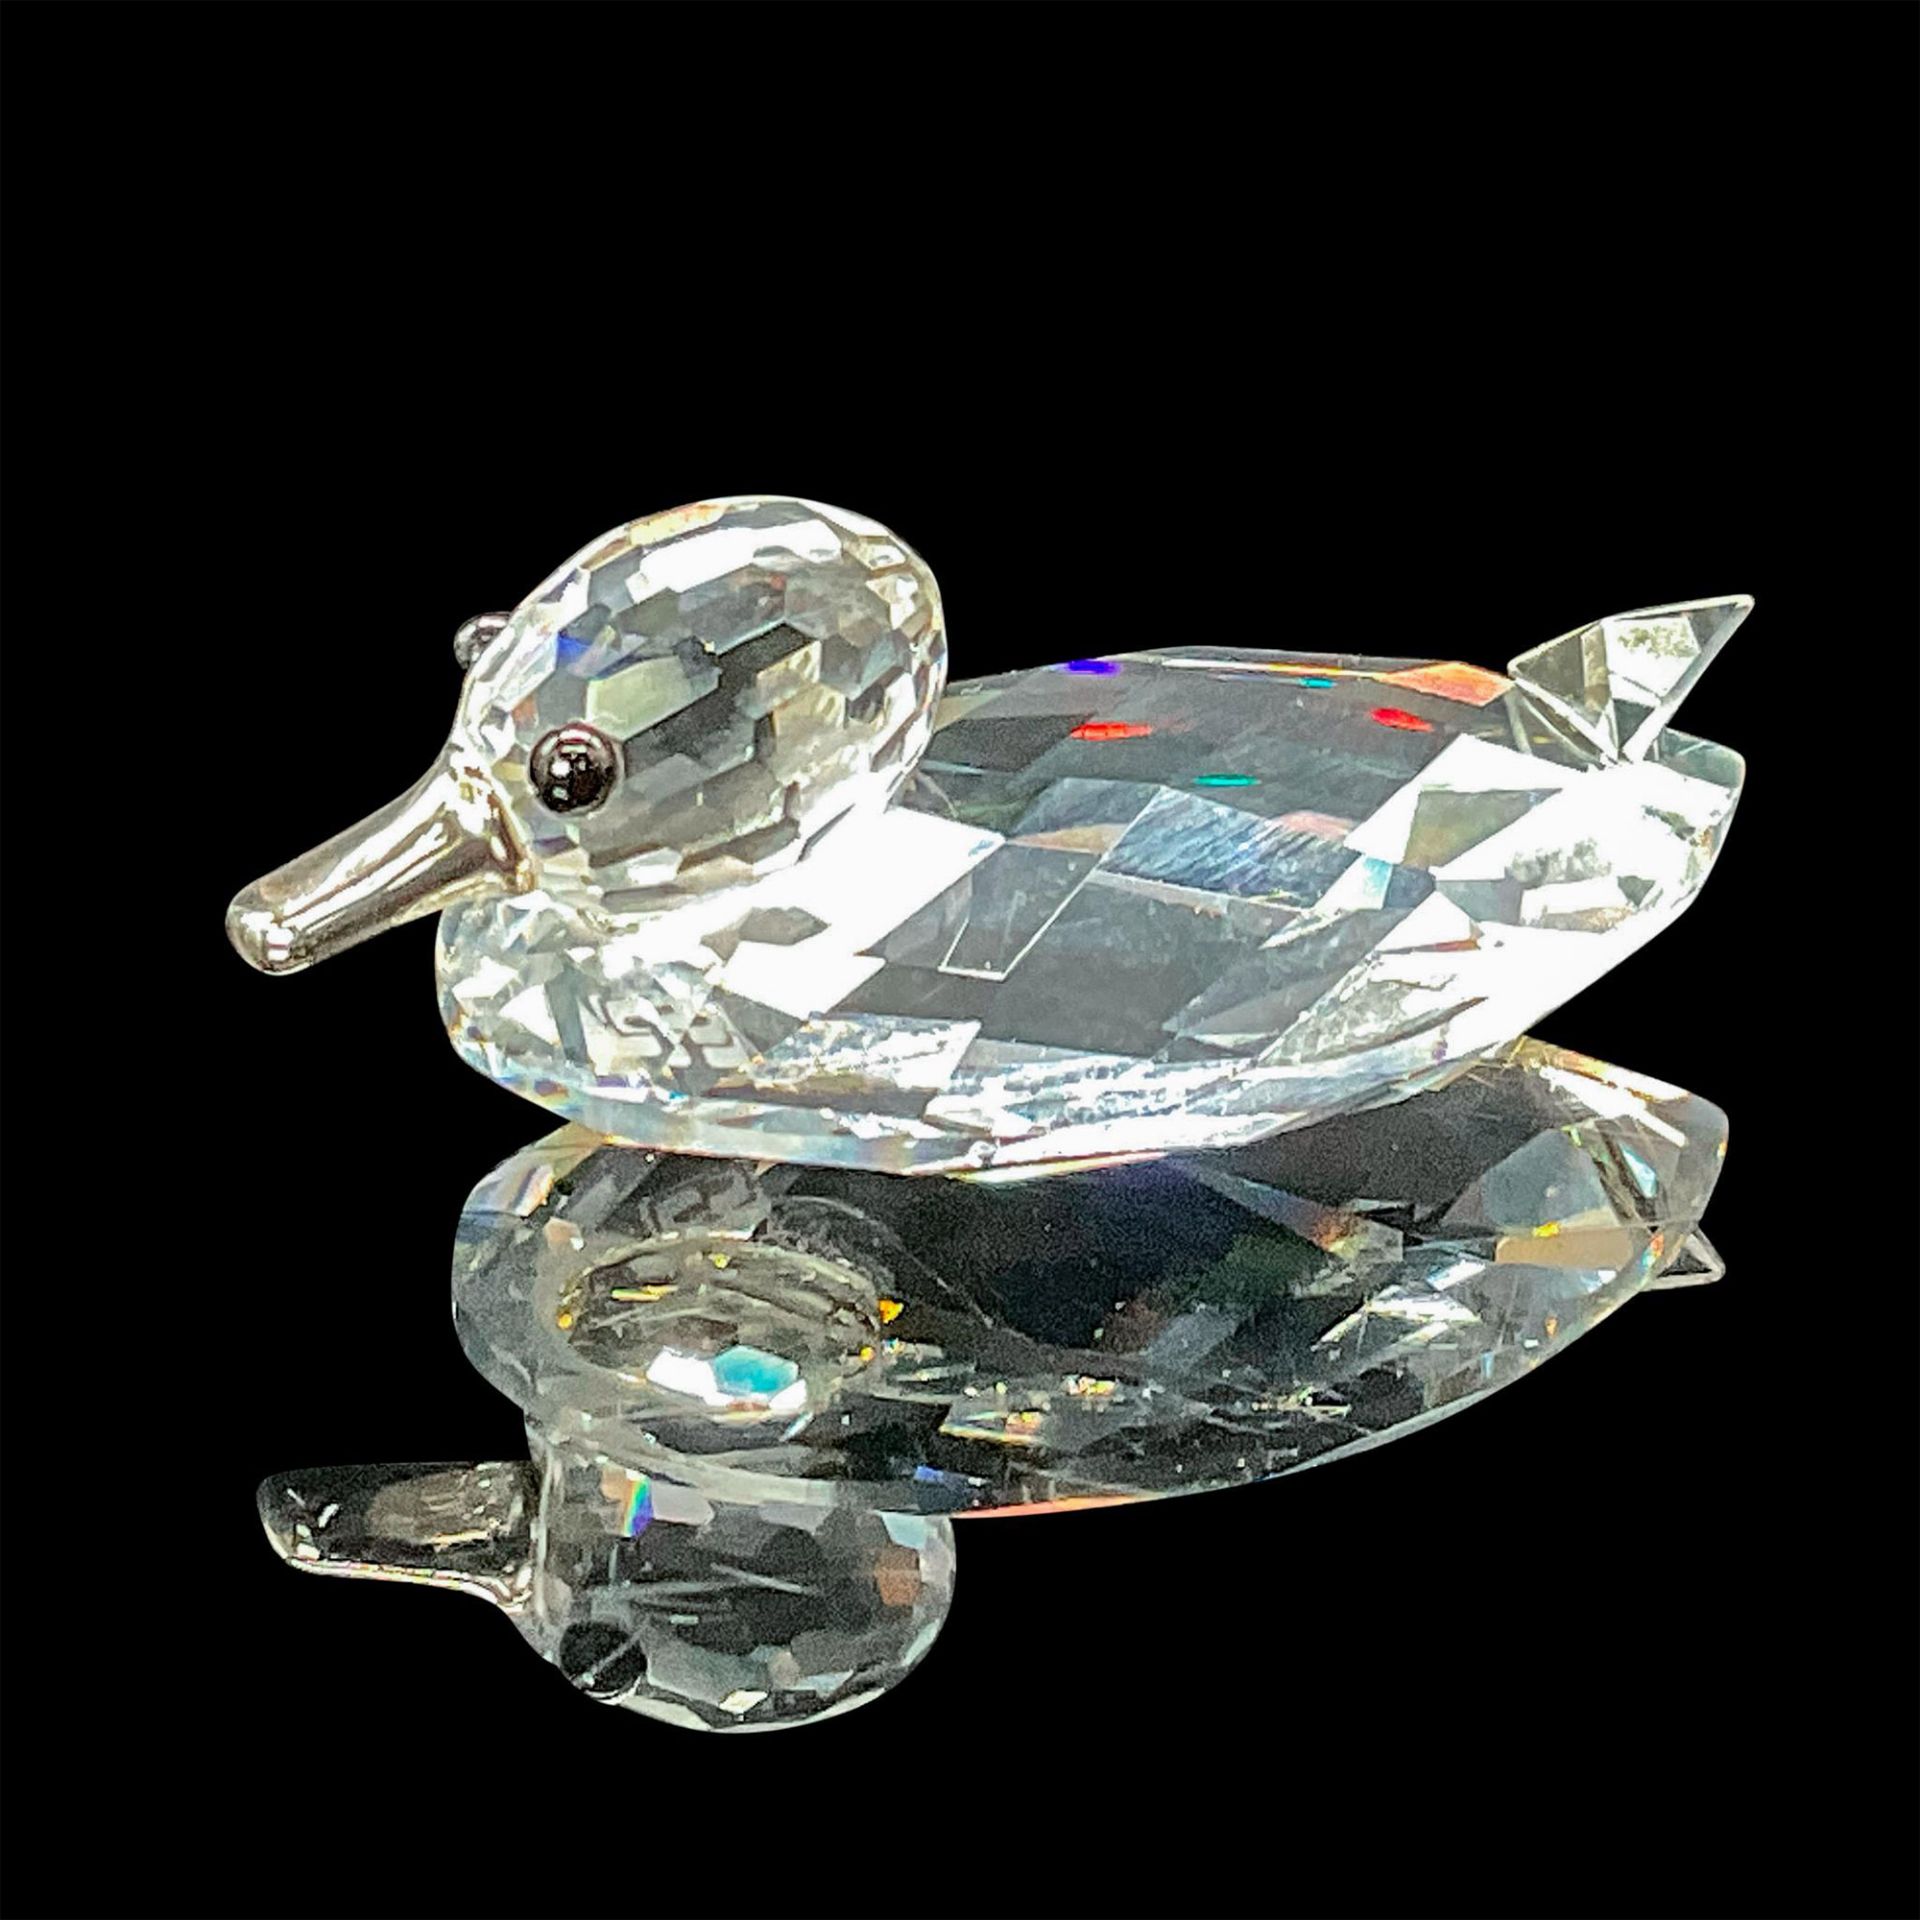 Swarovski Crystal Figurine Mini Duck with Metal Beak - Image 2 of 3